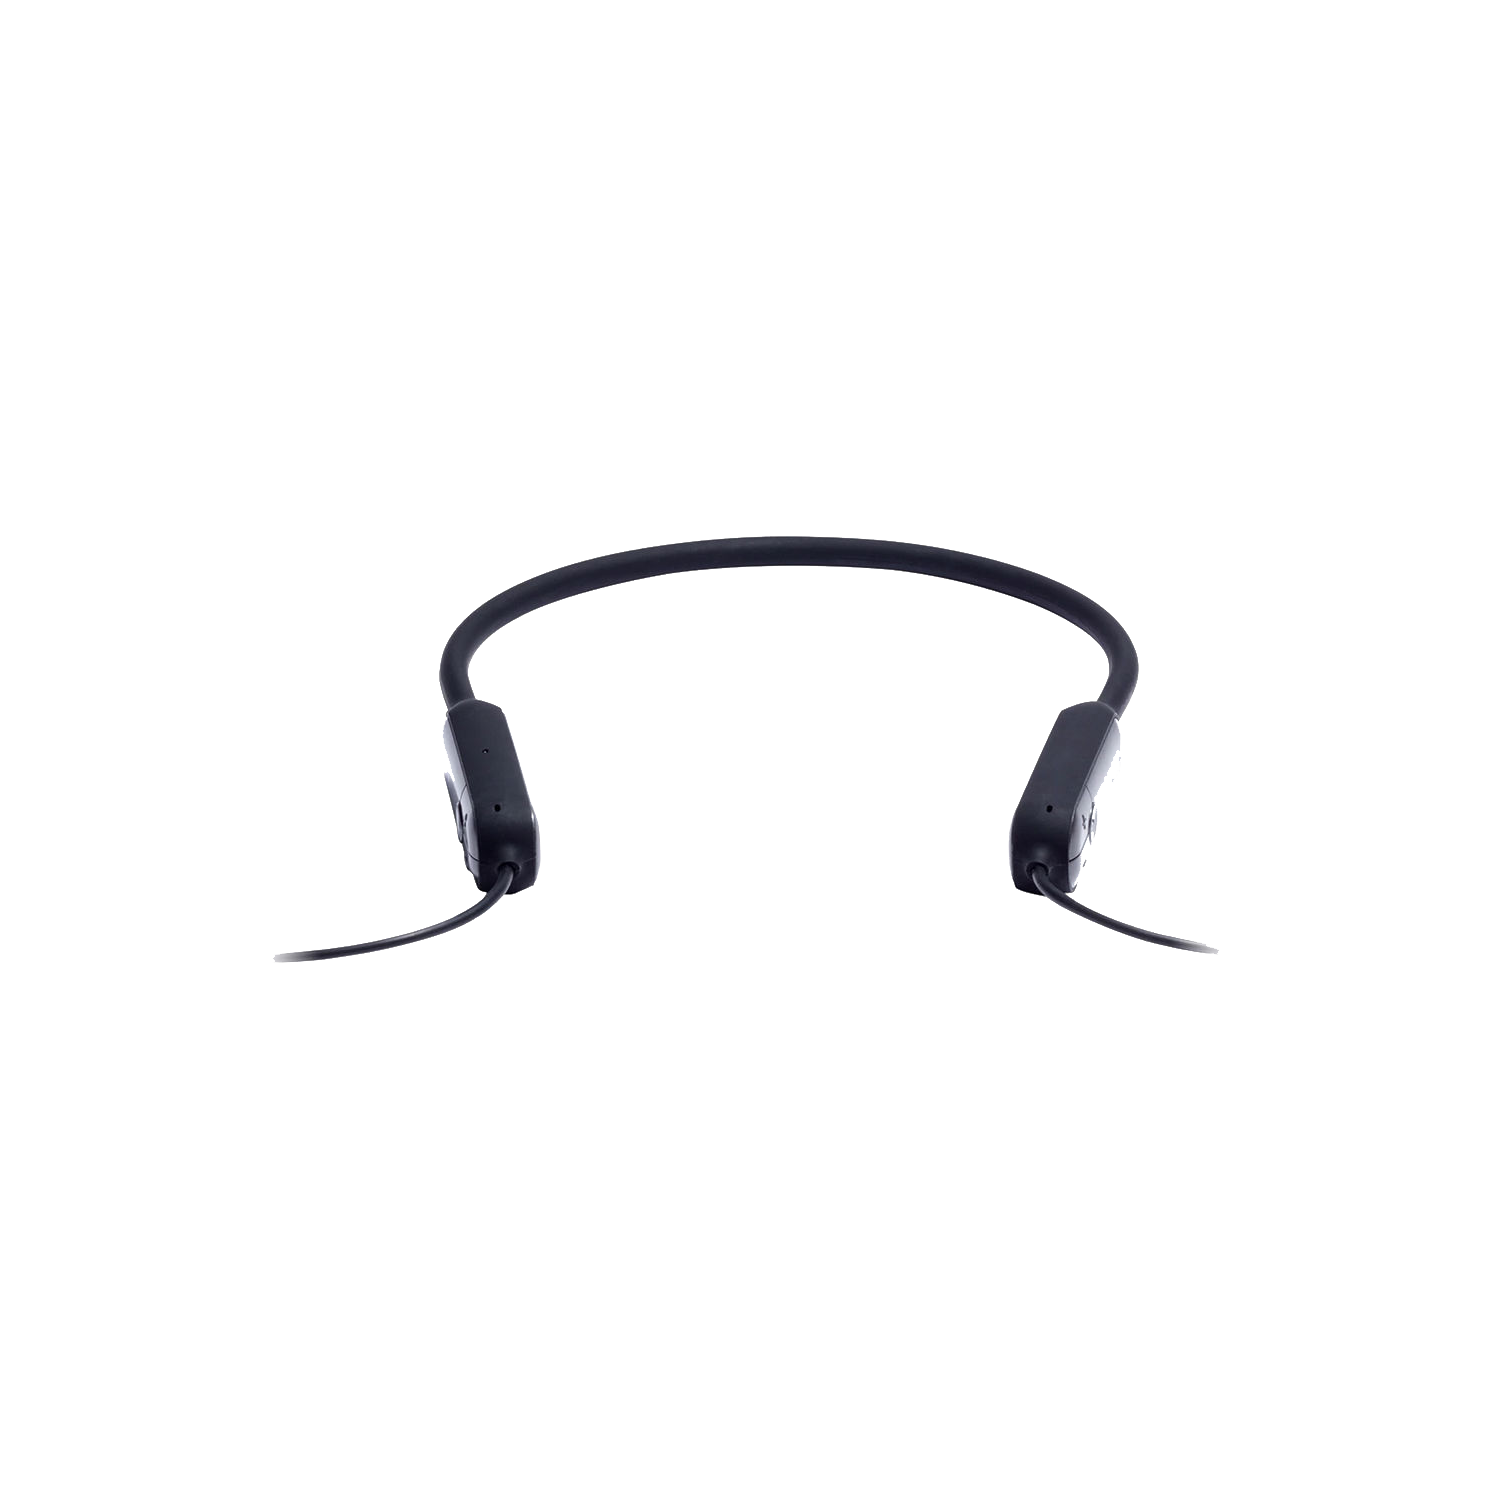 JBL Everest Elite 150NC Wireless Noise-Canceling In-Ear Headphones (Gunmetal)